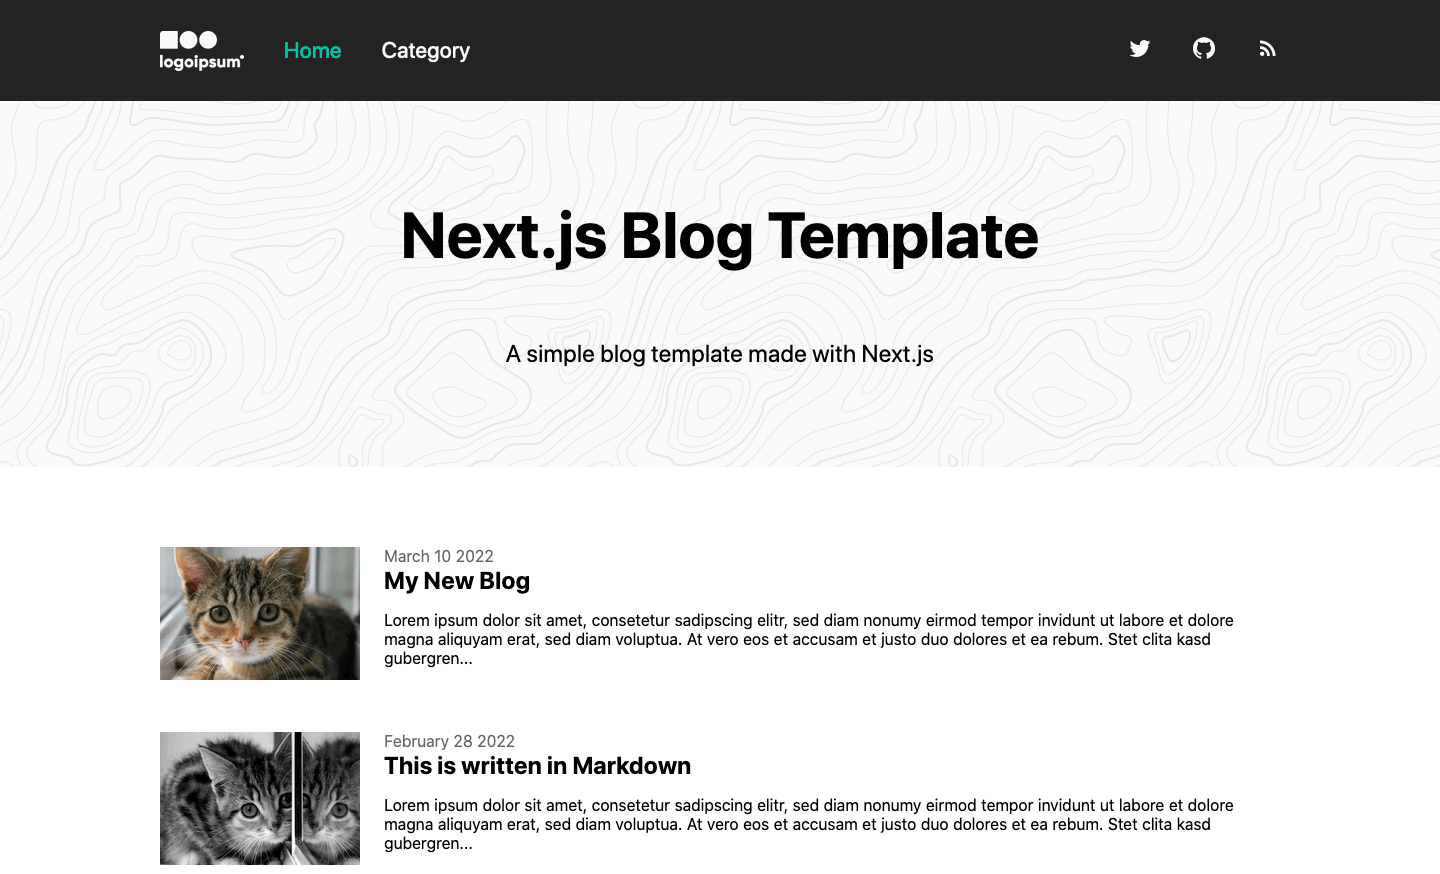 Next.js Blog Template wweb.dev